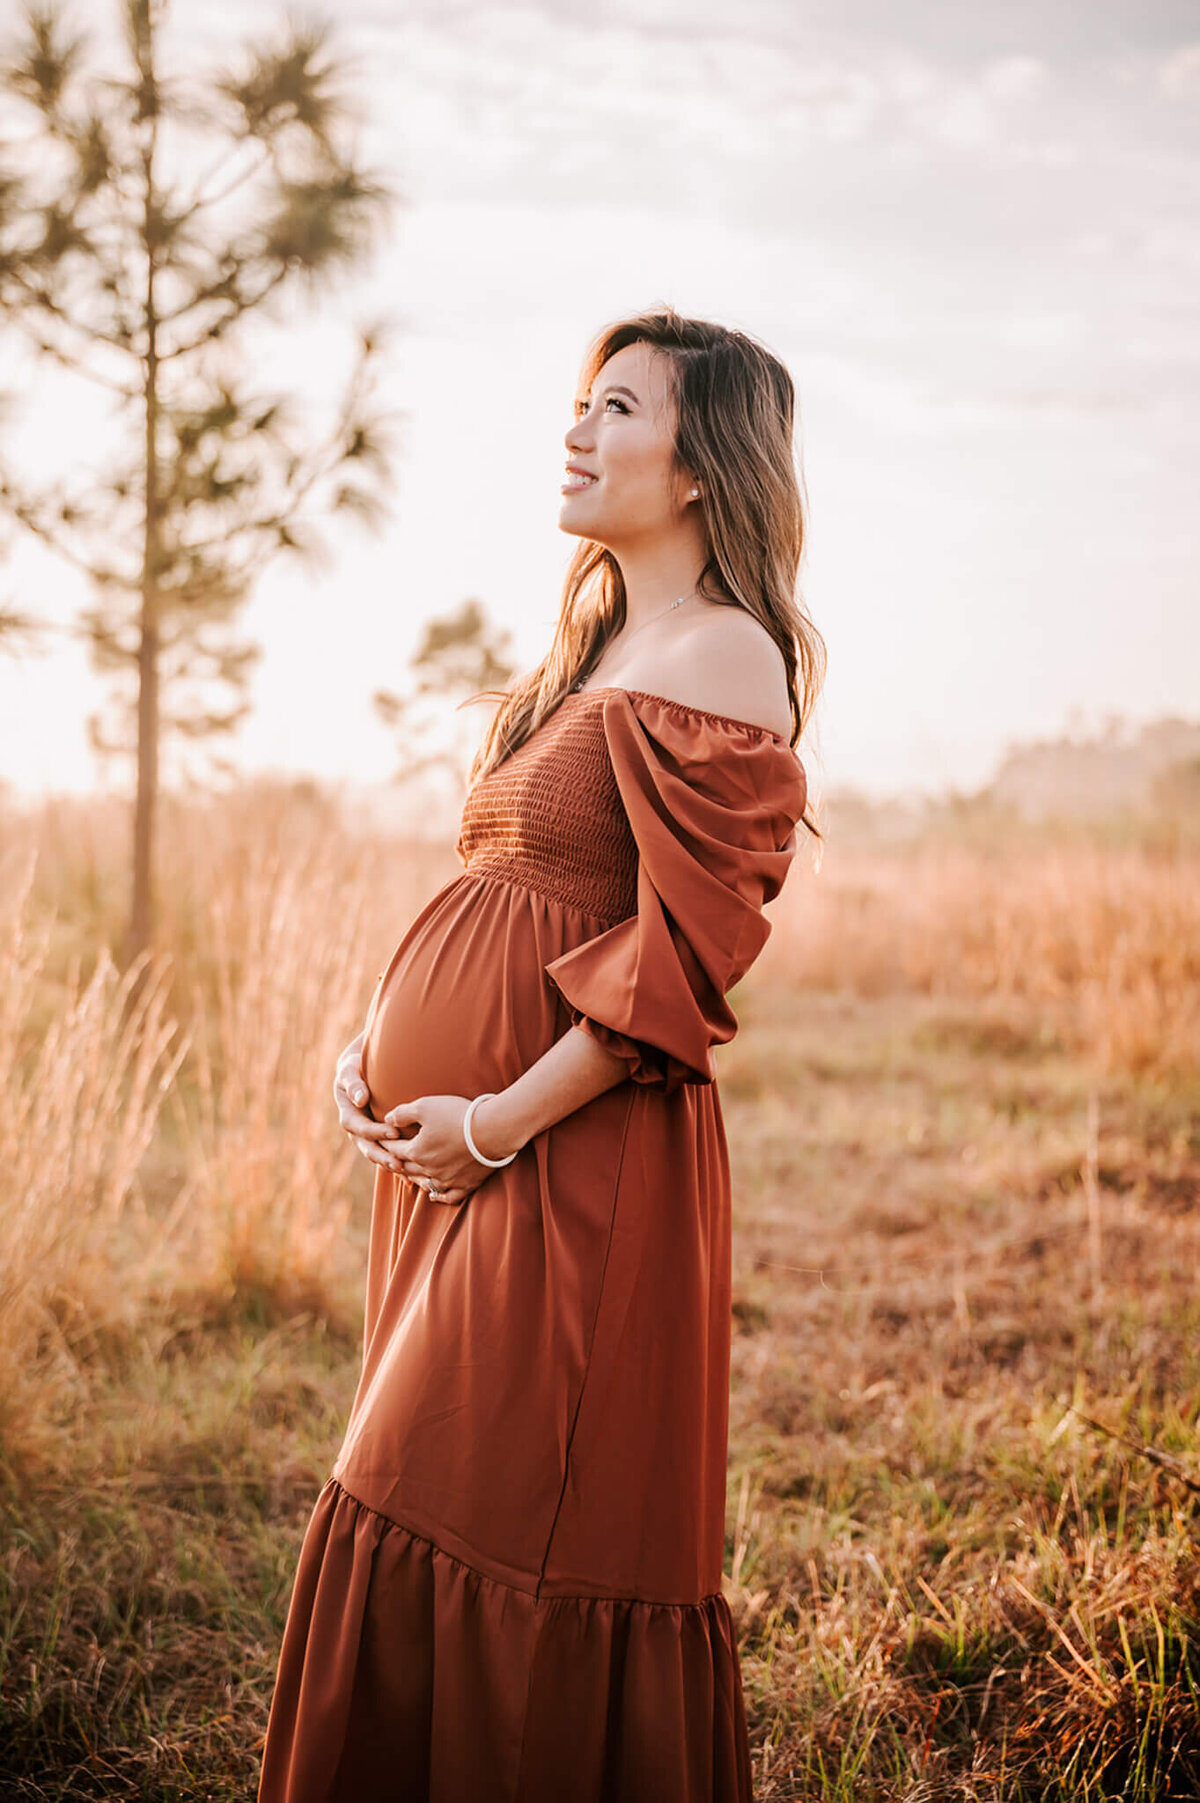 greensboro-maternity-photographer-haleigh-nicole-photography-554